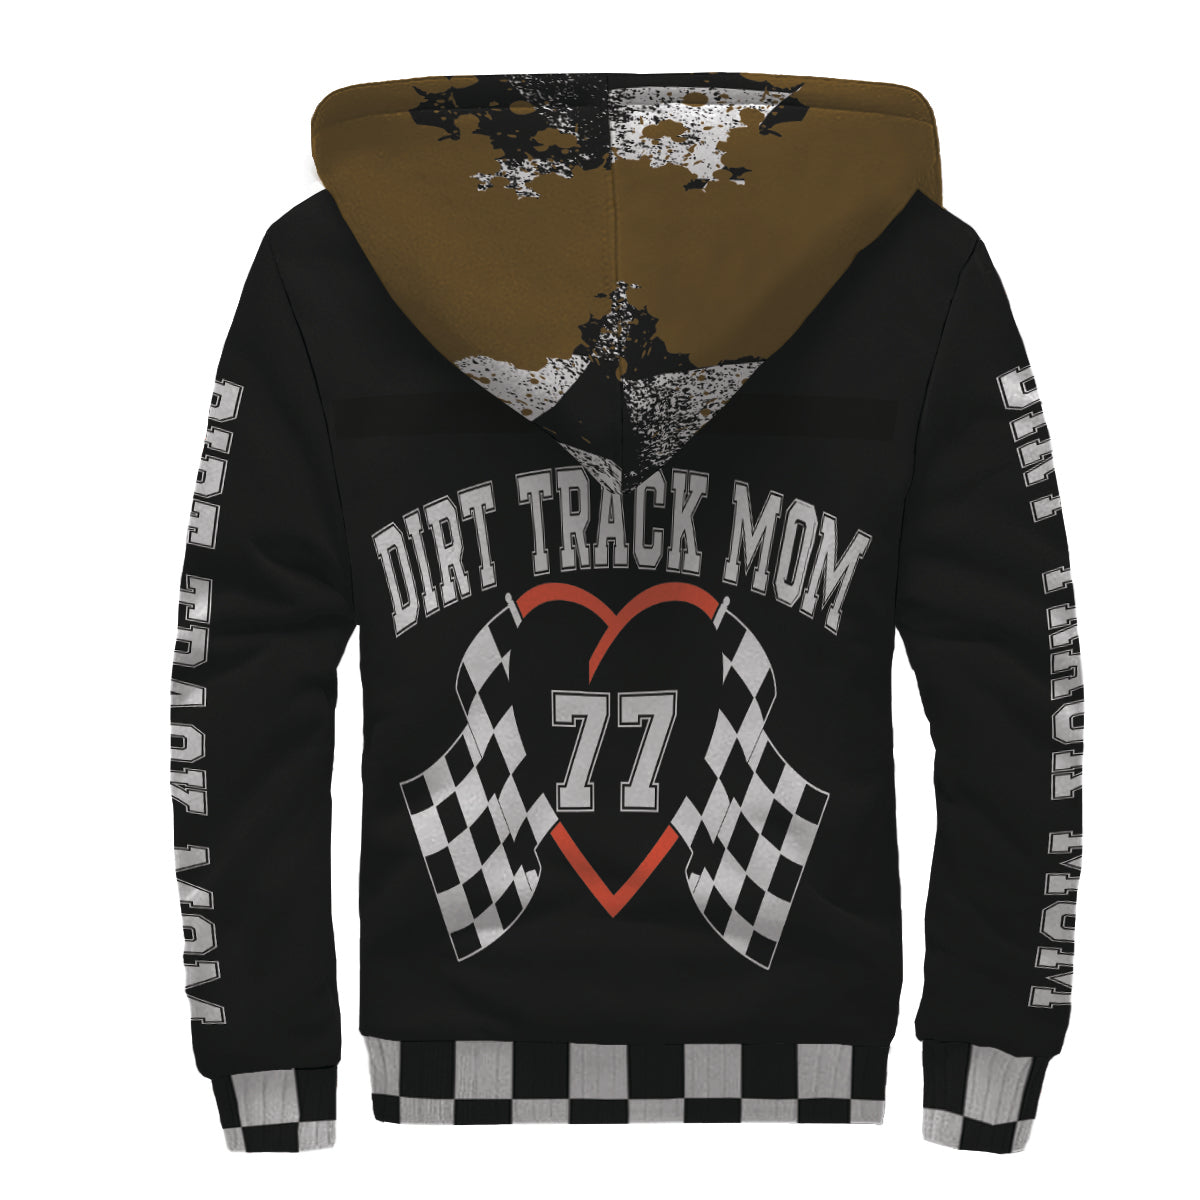 Dirt Track Mom Sherpa Jacket